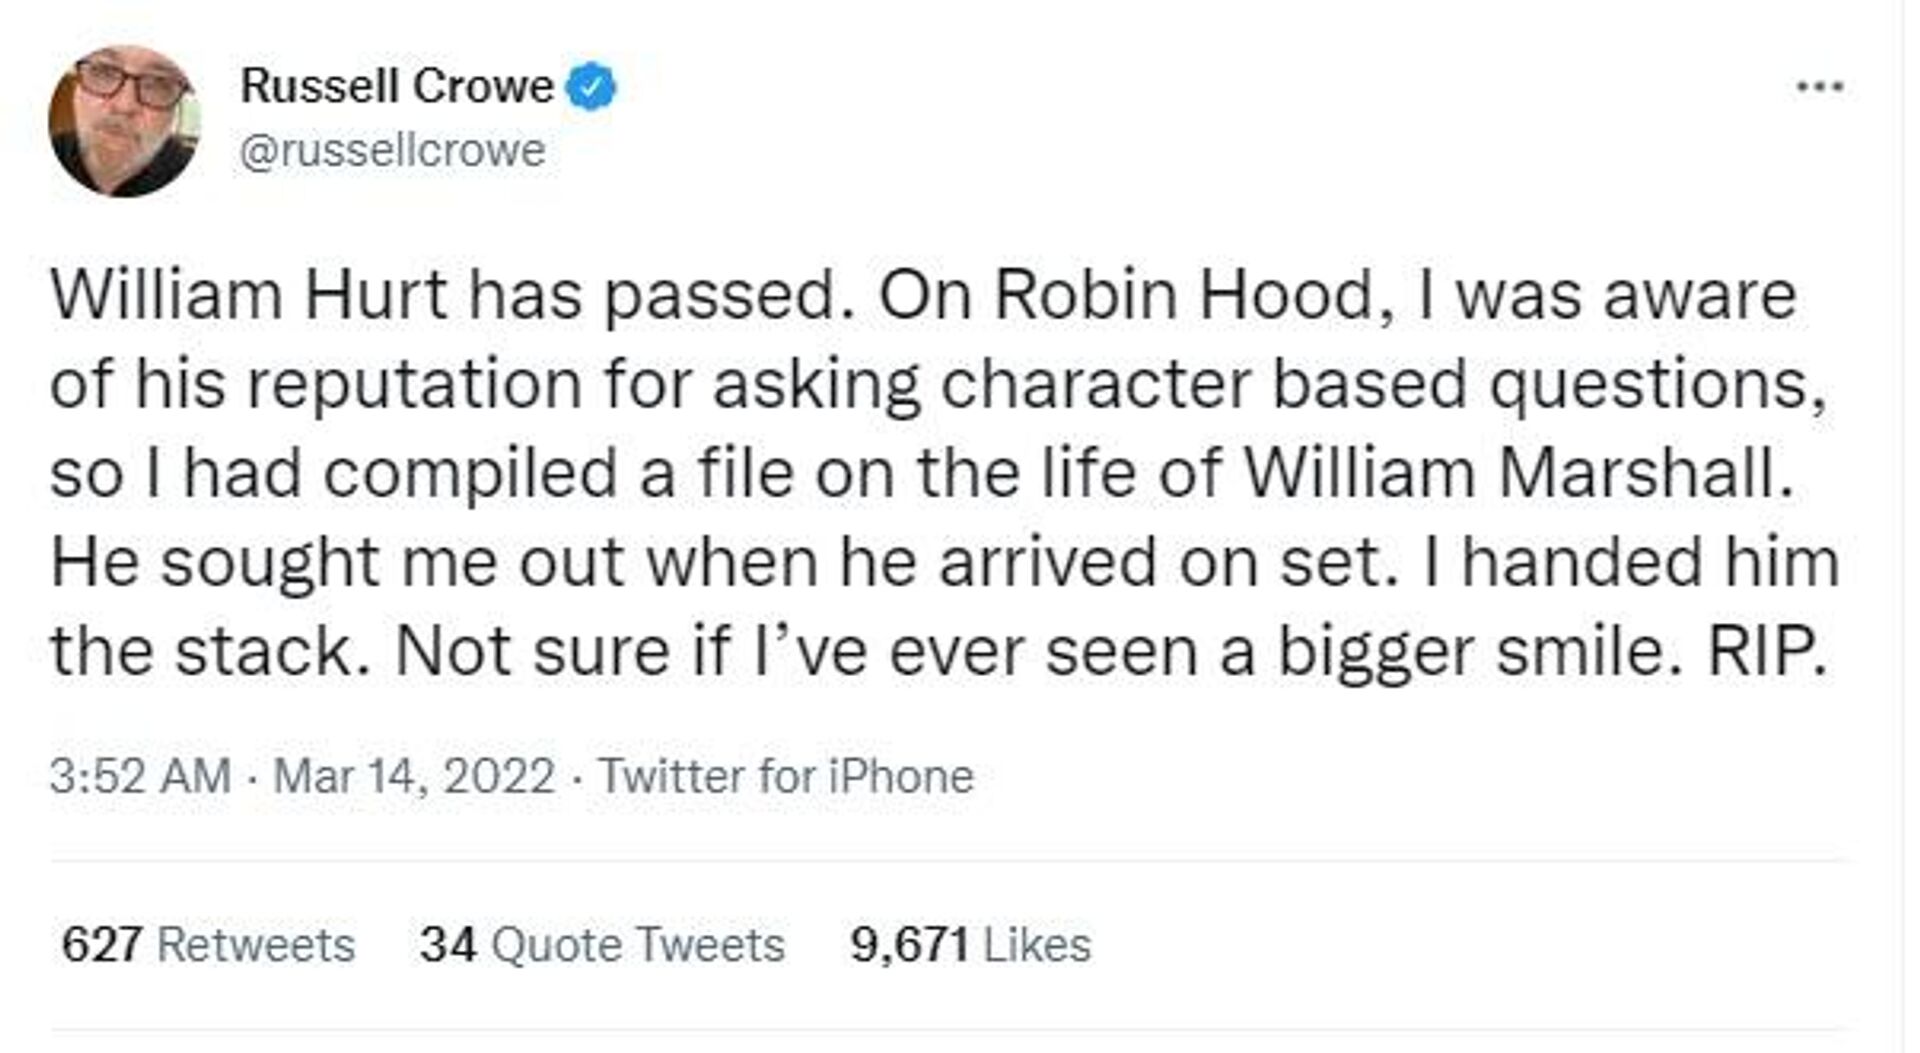 Actor Russell Crowe pour in condolences on veteran Oscar-winning actor William Hurt's demise - Sputnik International, 1920, 14.03.2022